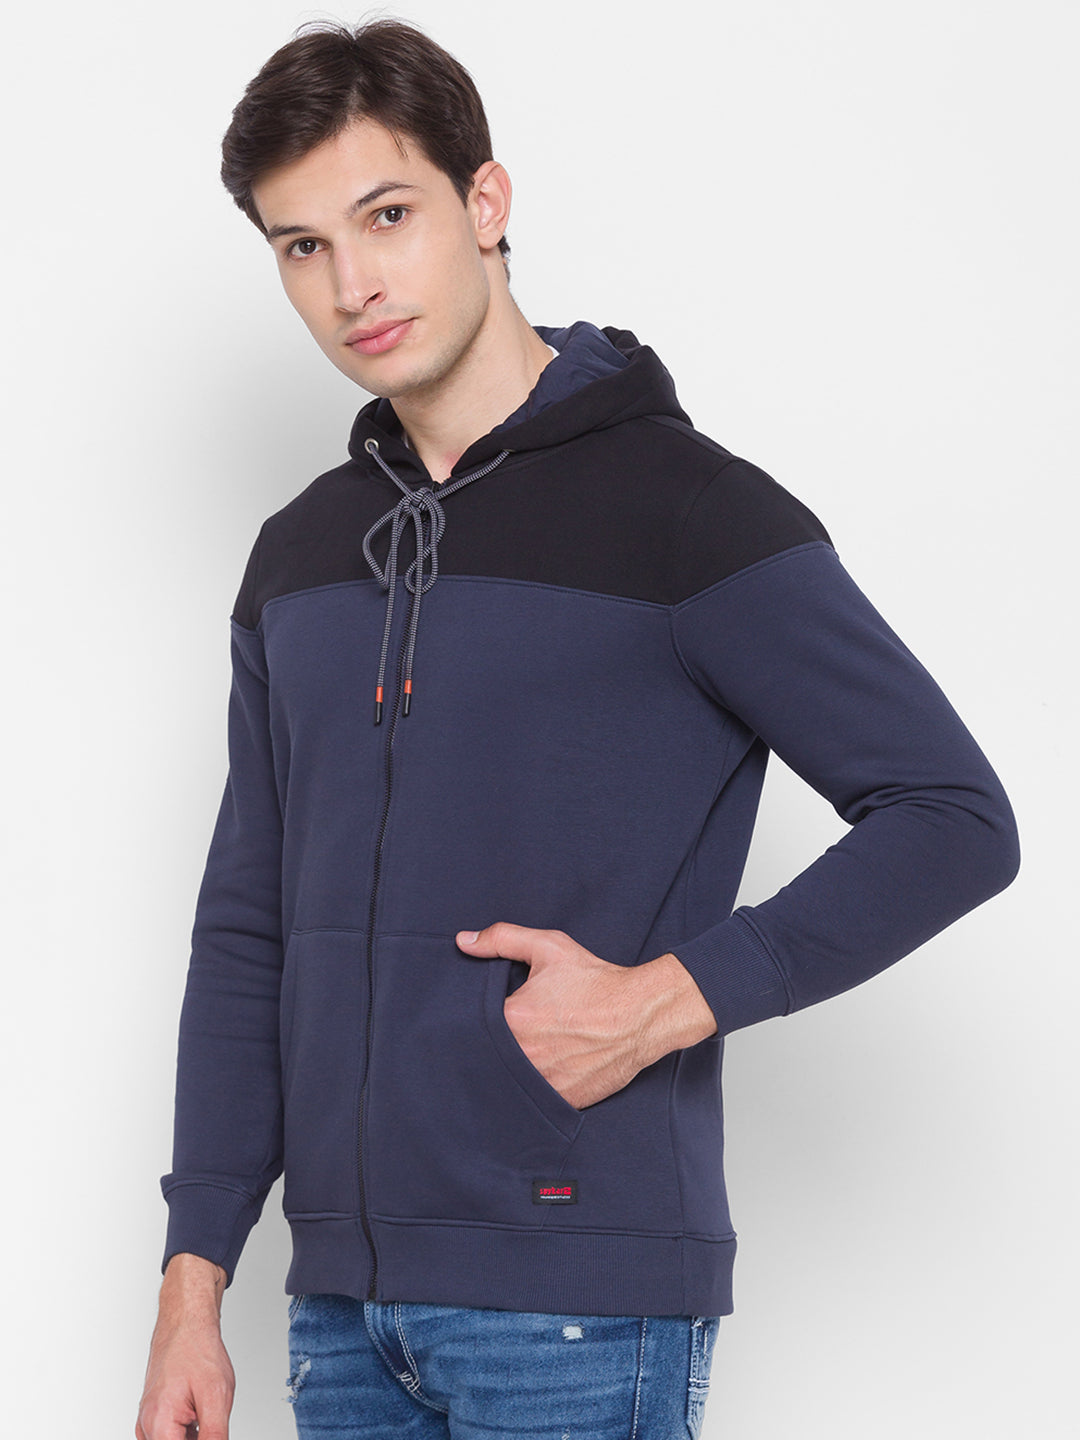 Spykar Grey Cotton Sweatshirt For Men